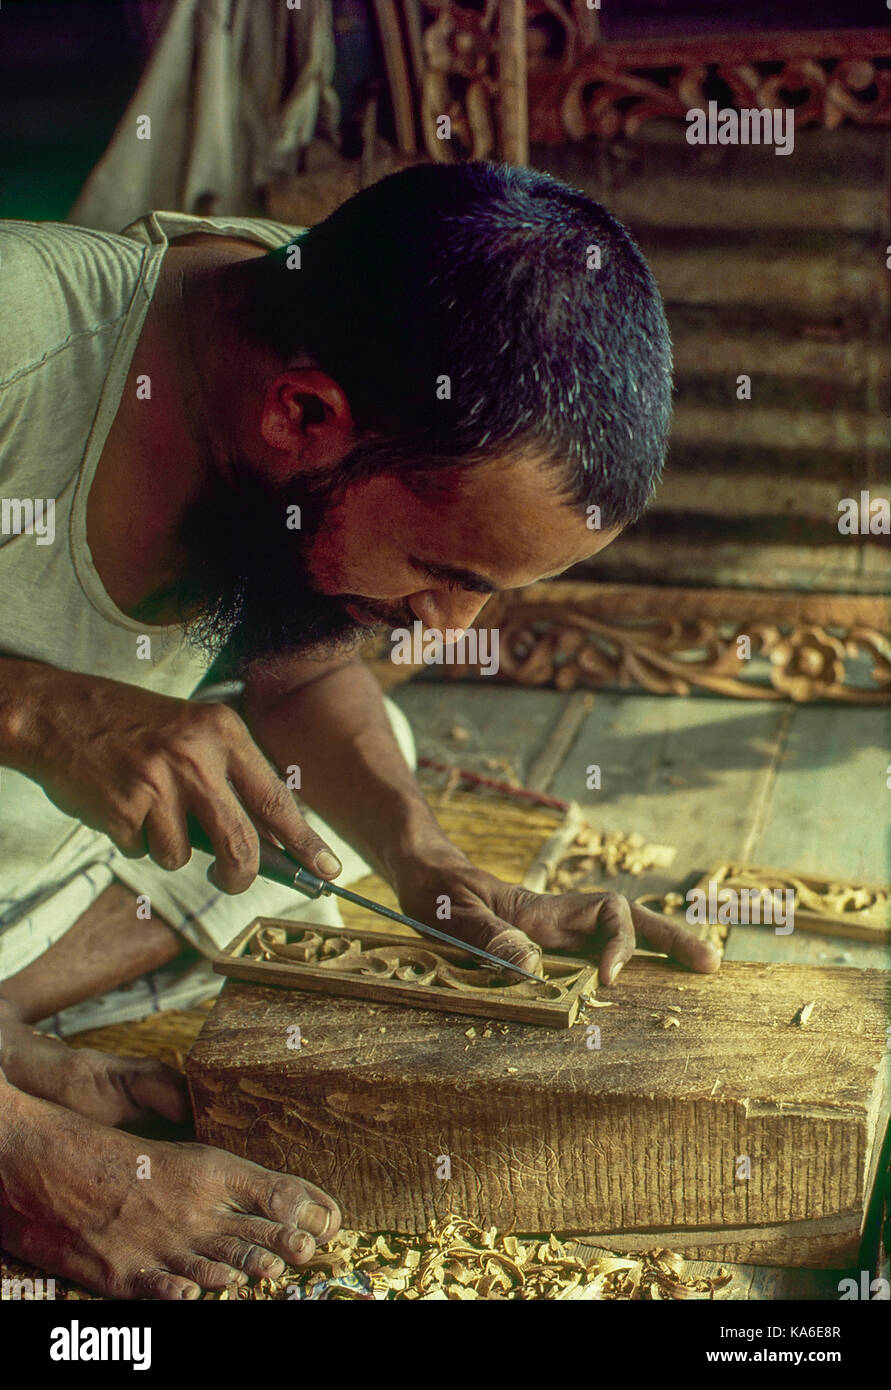 muslim craftsman carving design in wood, mahim, mumbai, maharashtra, India, Asia Stock Photo